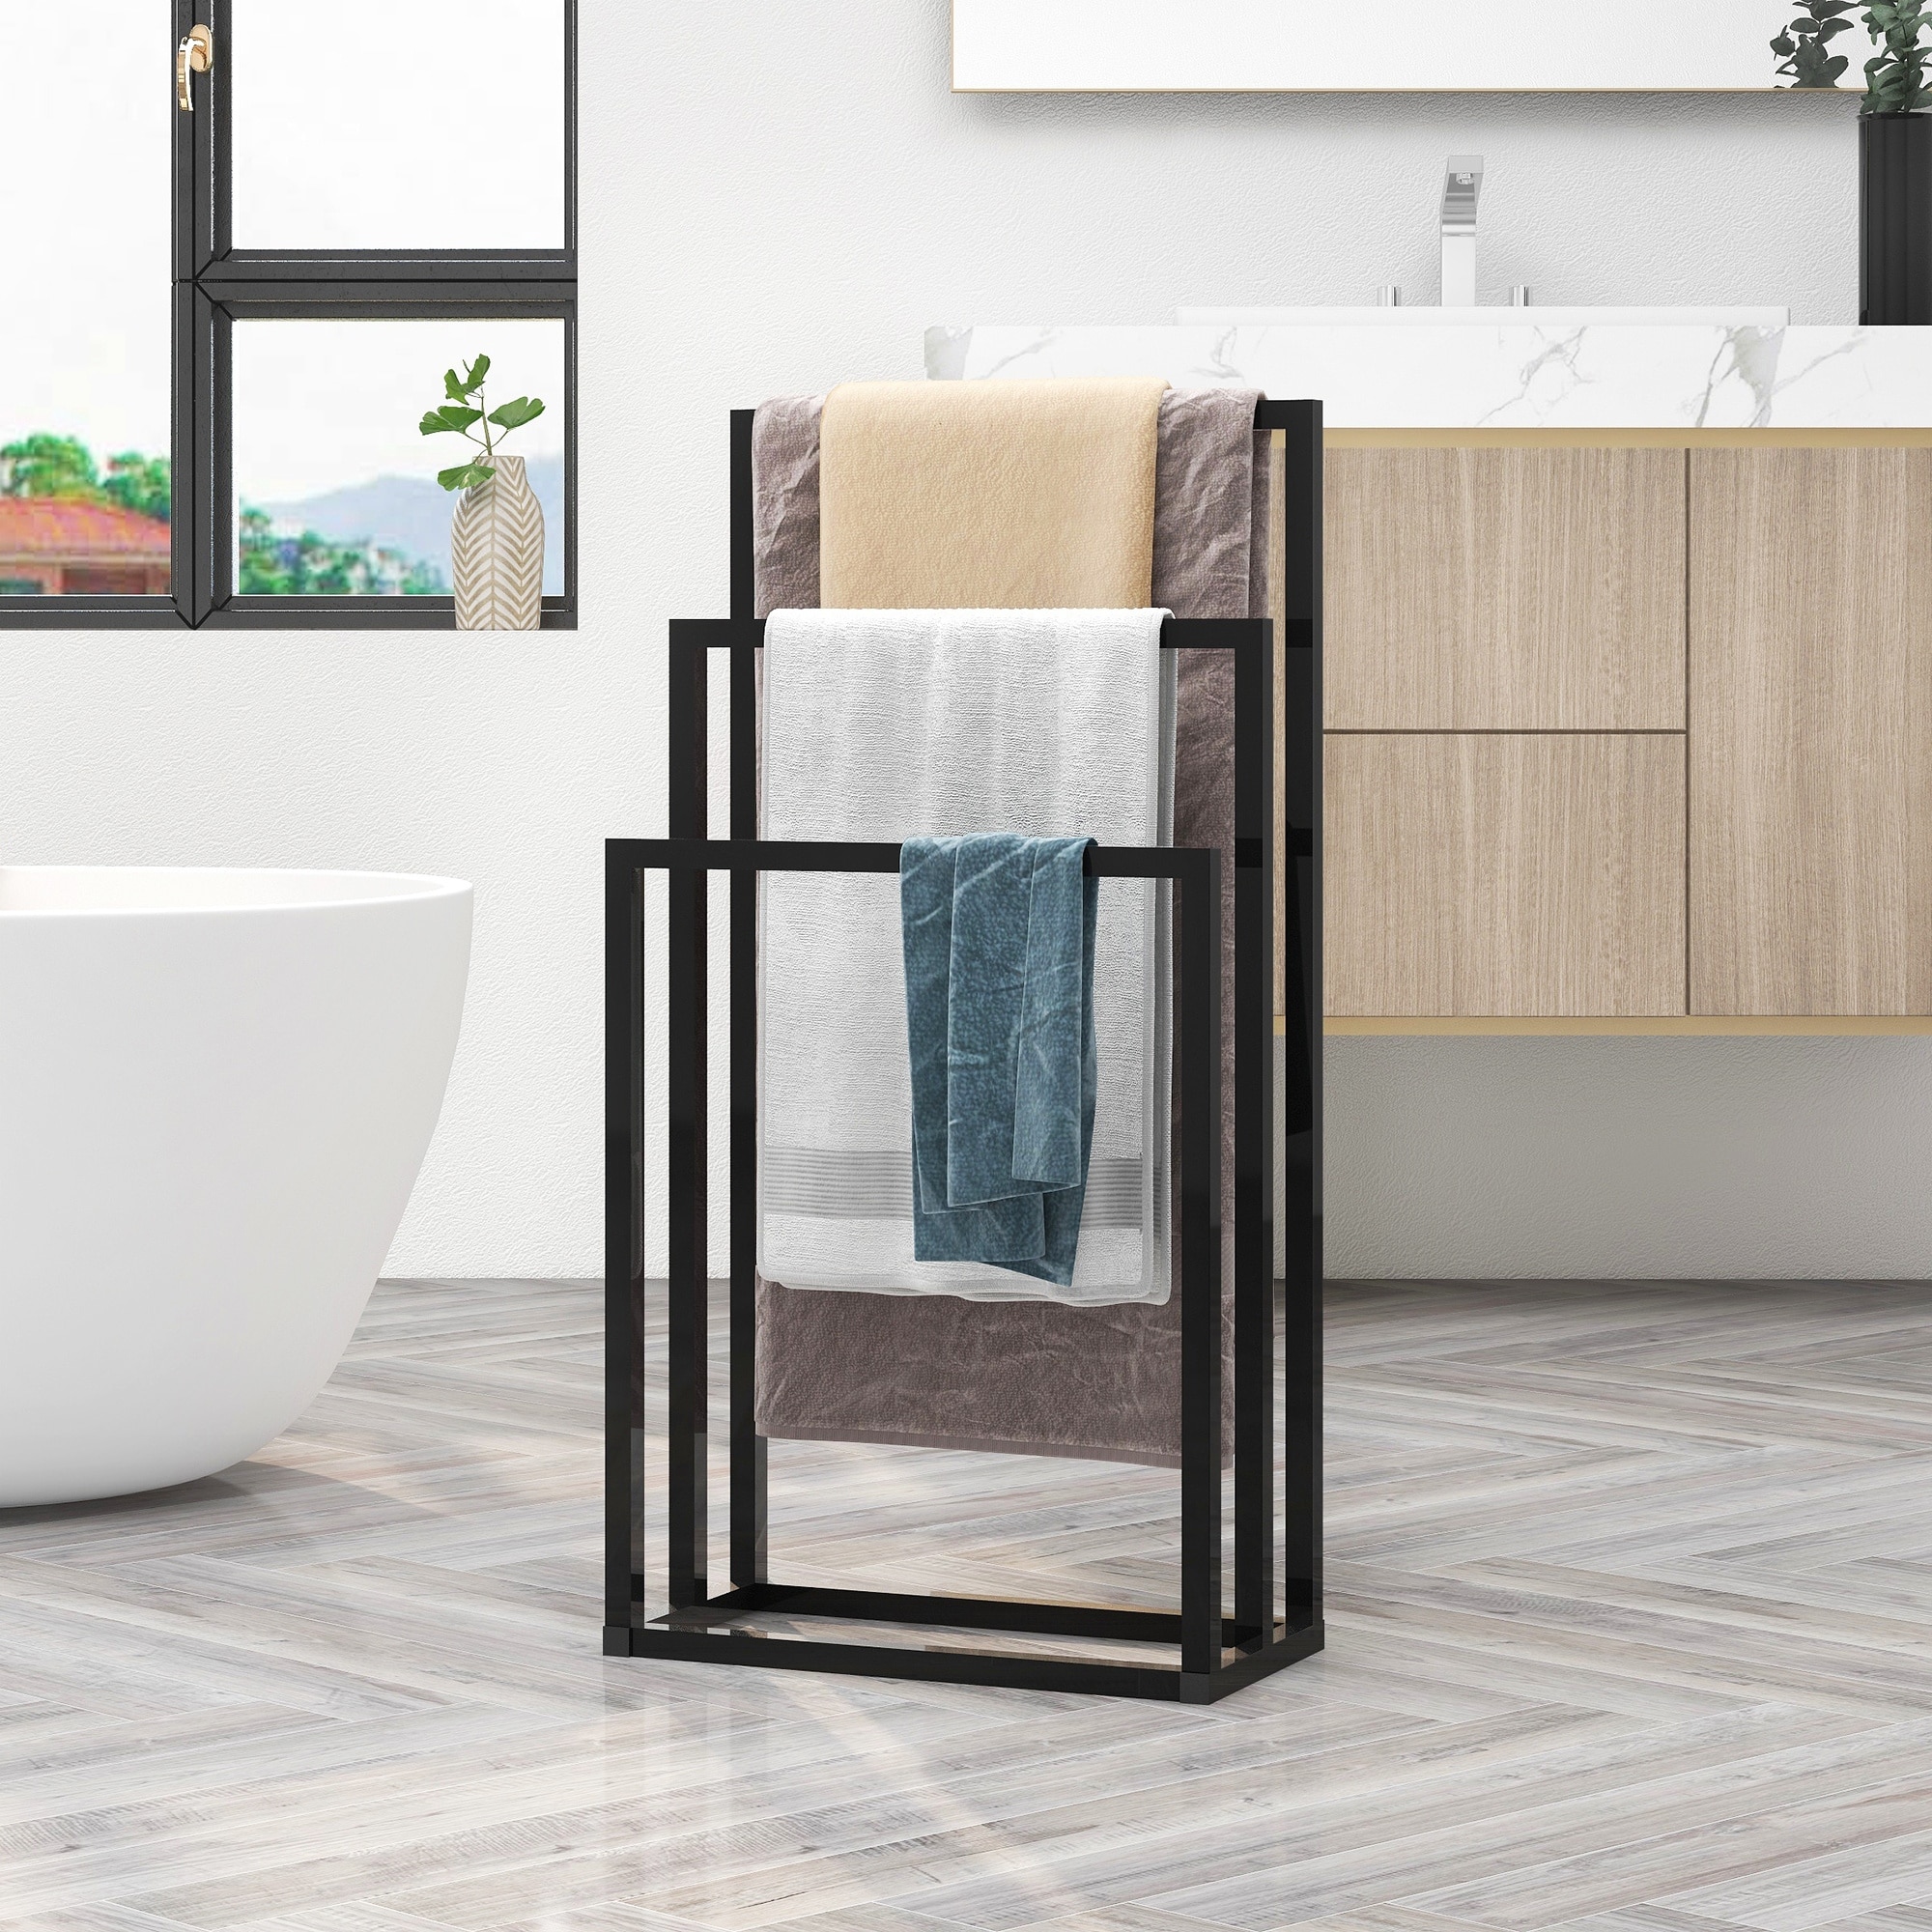 https://ak1.ostkcdn.com/images/products/is/images/direct/0dd08972438561e04e3171009dc4386792a4d437/Freestanding-3-Tier-Metal-Towel-Bar-Towel-Rack-for-Bathroom%2C-Bedroom%2C-Dressing-Room.jpg